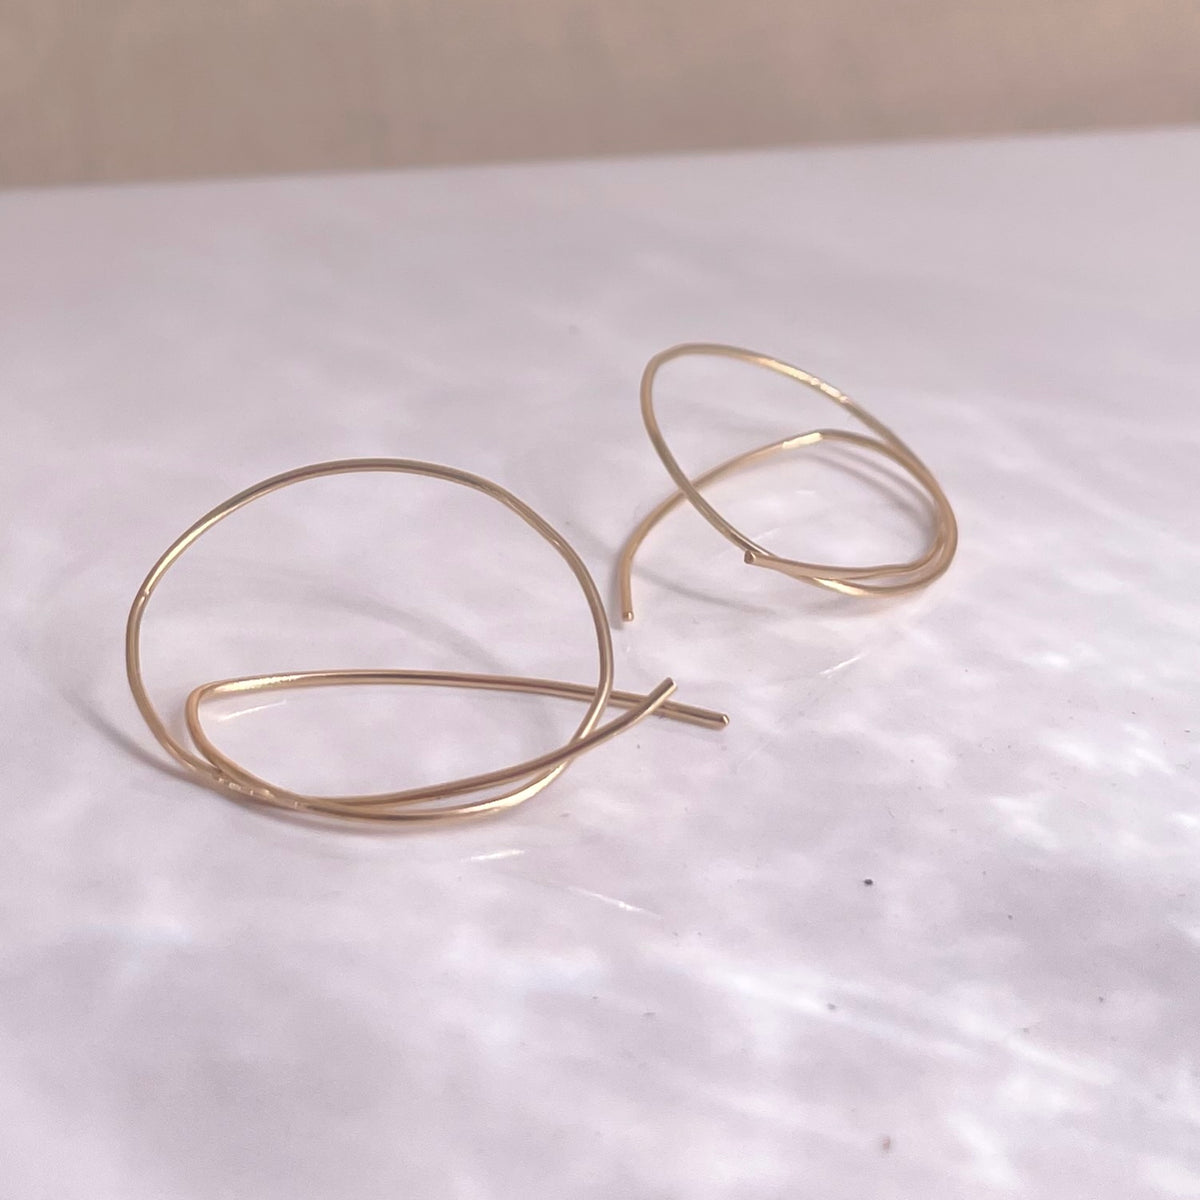 Thin Rope Earrings | Simple Dangle Hoops | Organic Circle Dangle Earrings | Everyday Gift for Her | Lightweight Earrings | 0361